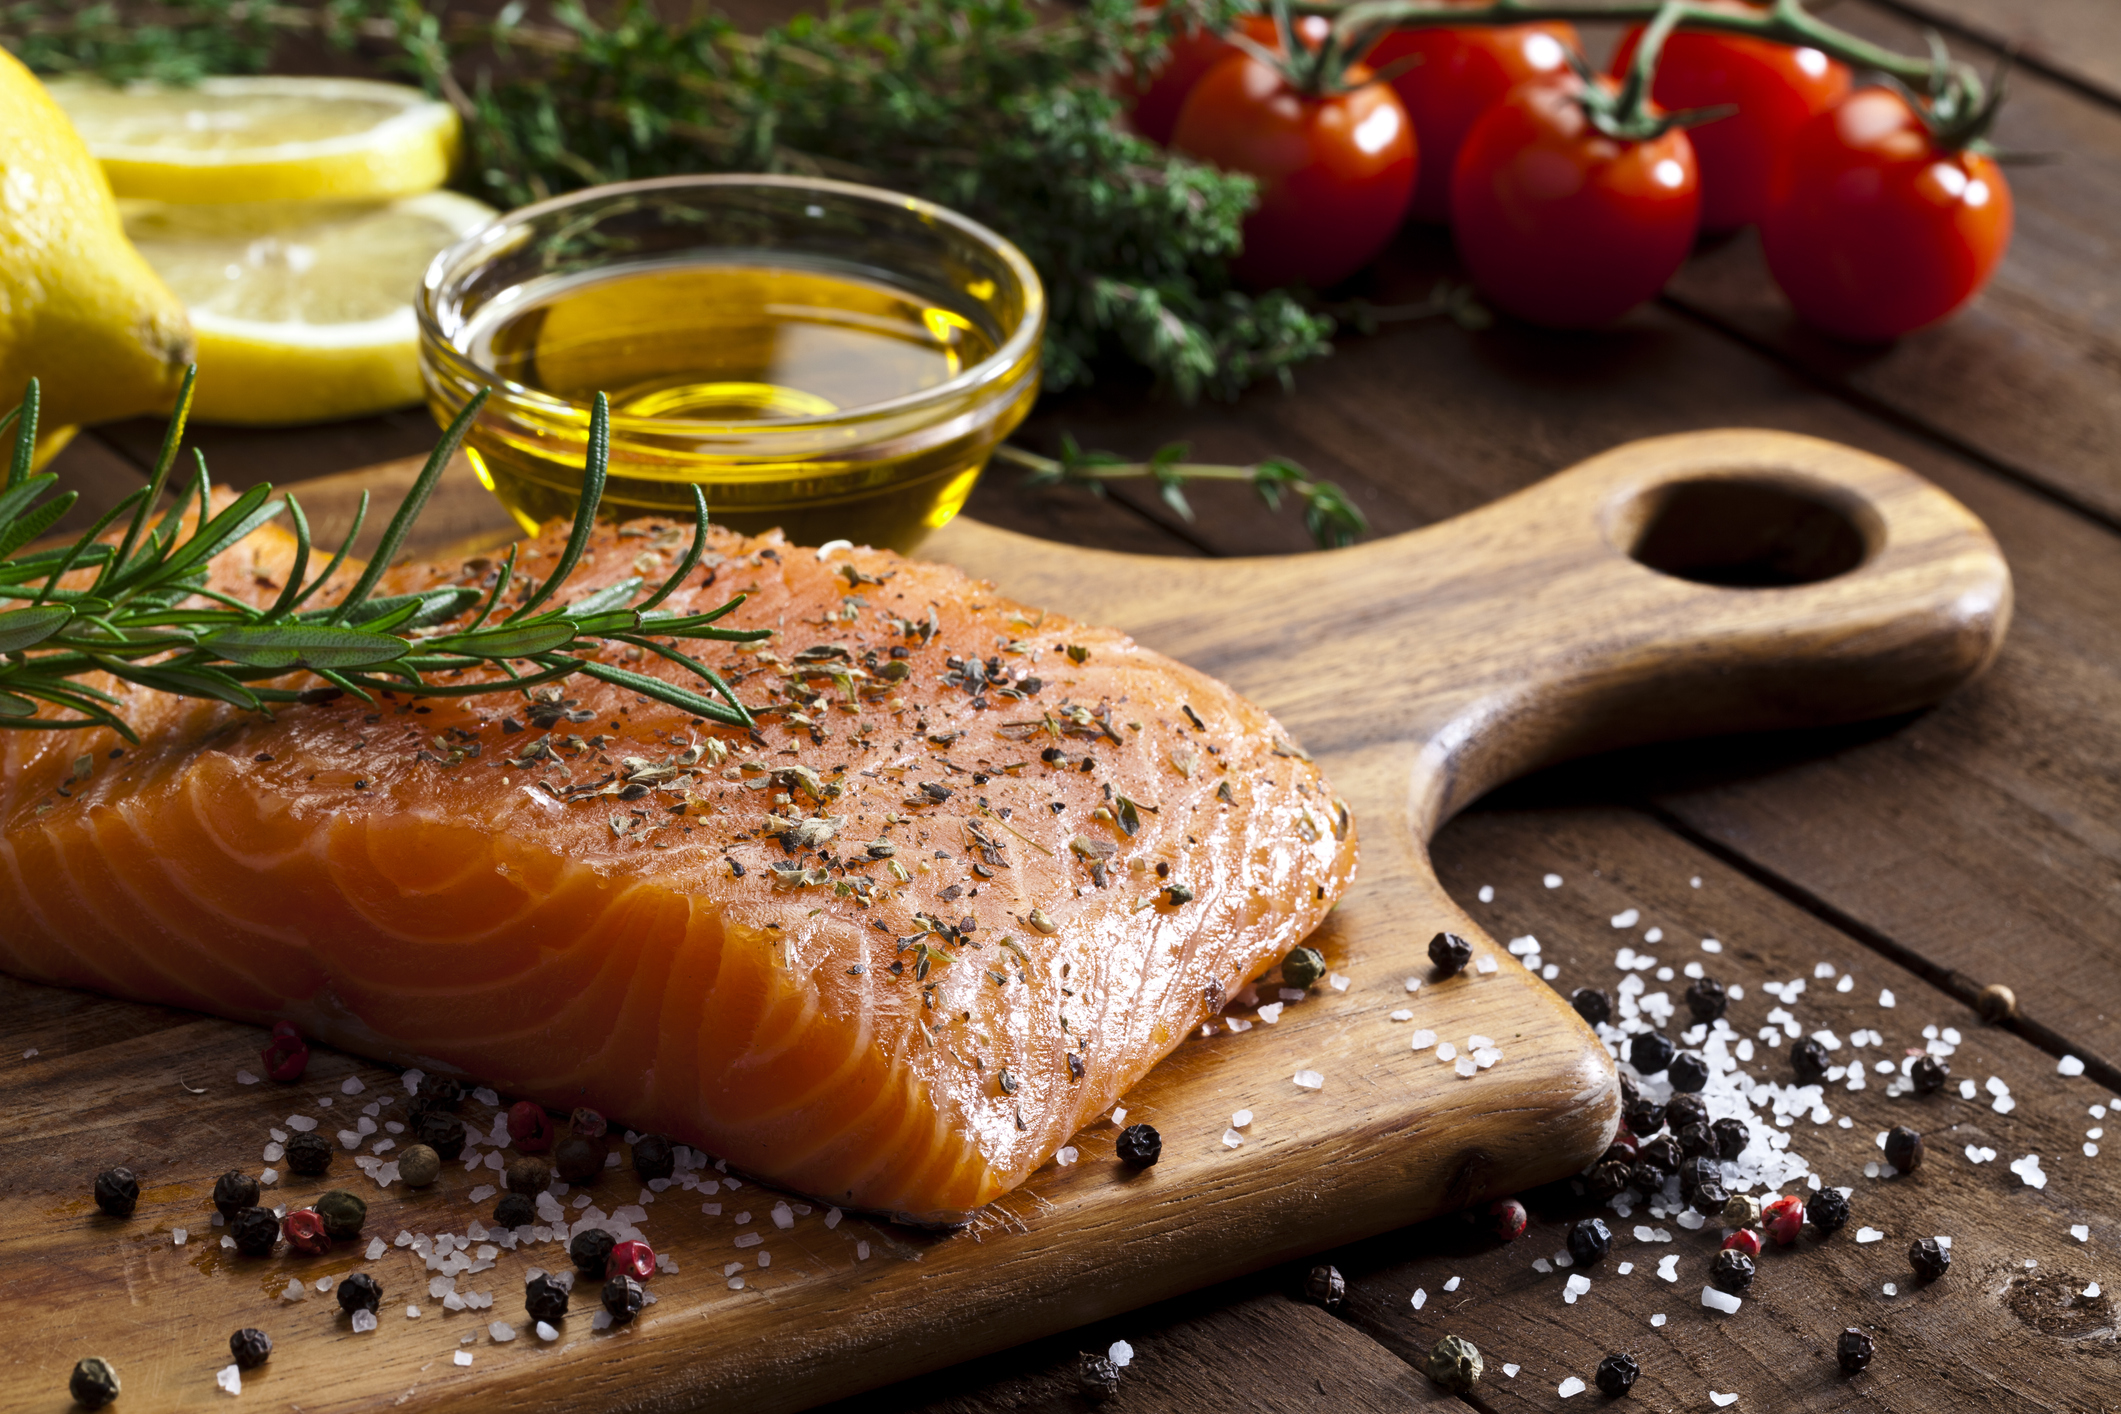 Salmon is a source of high-quality protein, vitamins (vitamin D, B vitamins), minerals (potassium and phosphorus) and antioxidants (selenium and vitamin E). Norwegian salmon provides Omega 3 fatty acids.